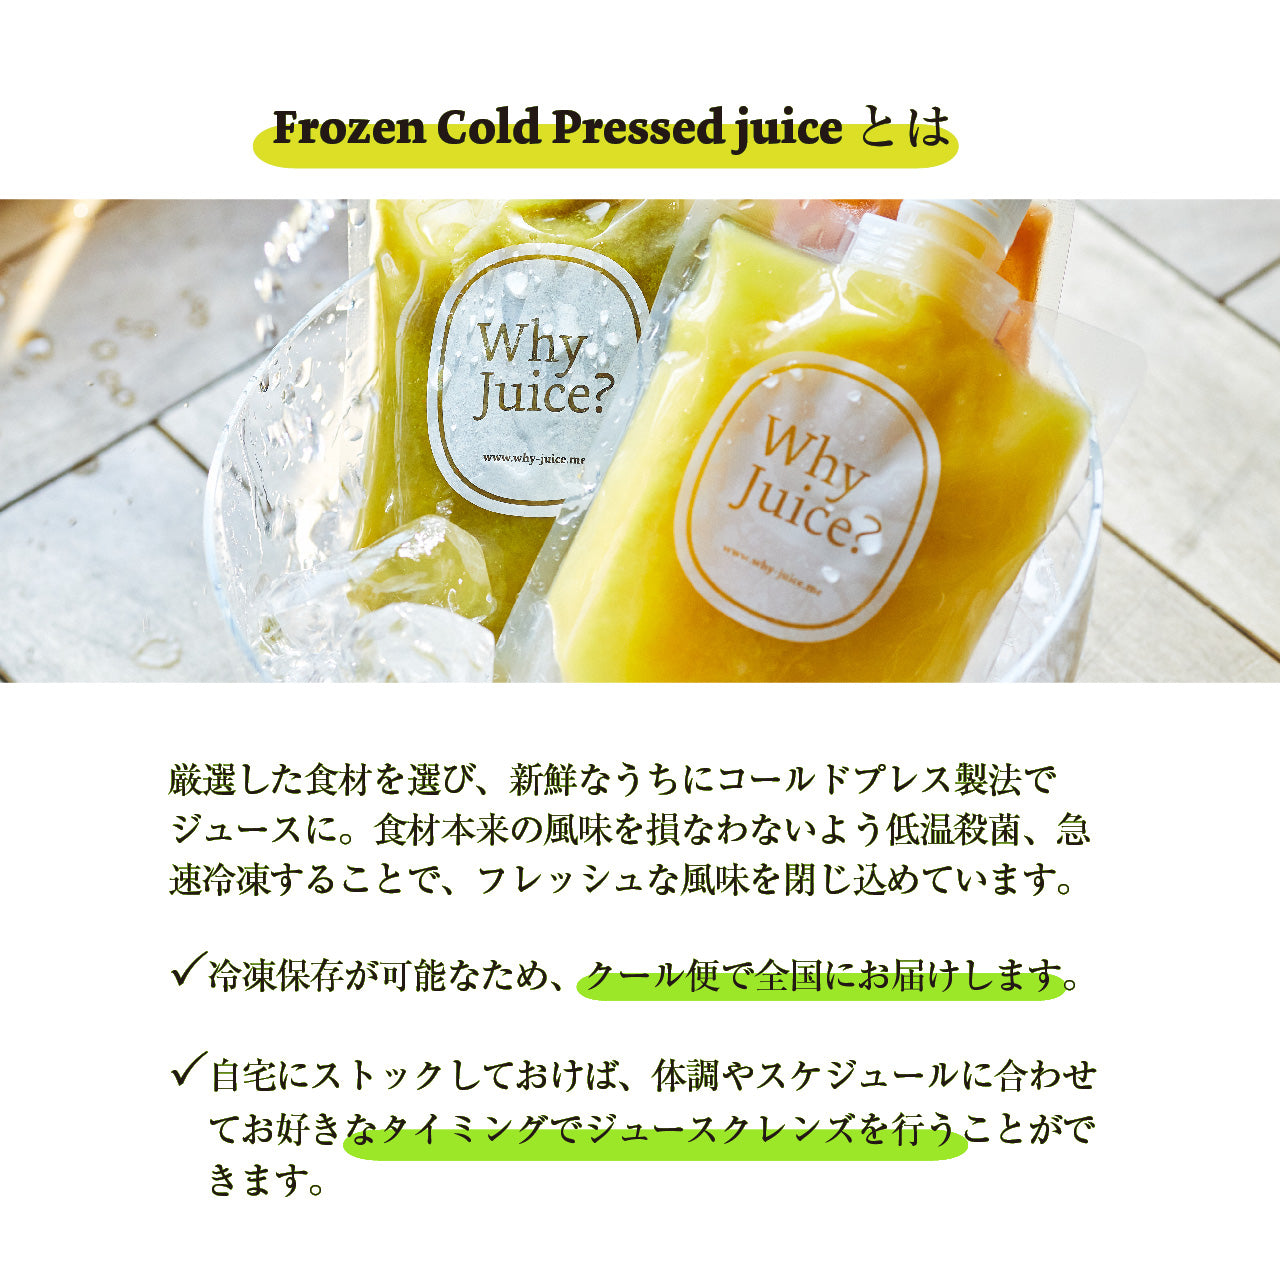 Frozen Detox Juice Program 【Half-day "SUNSET"】3本セット